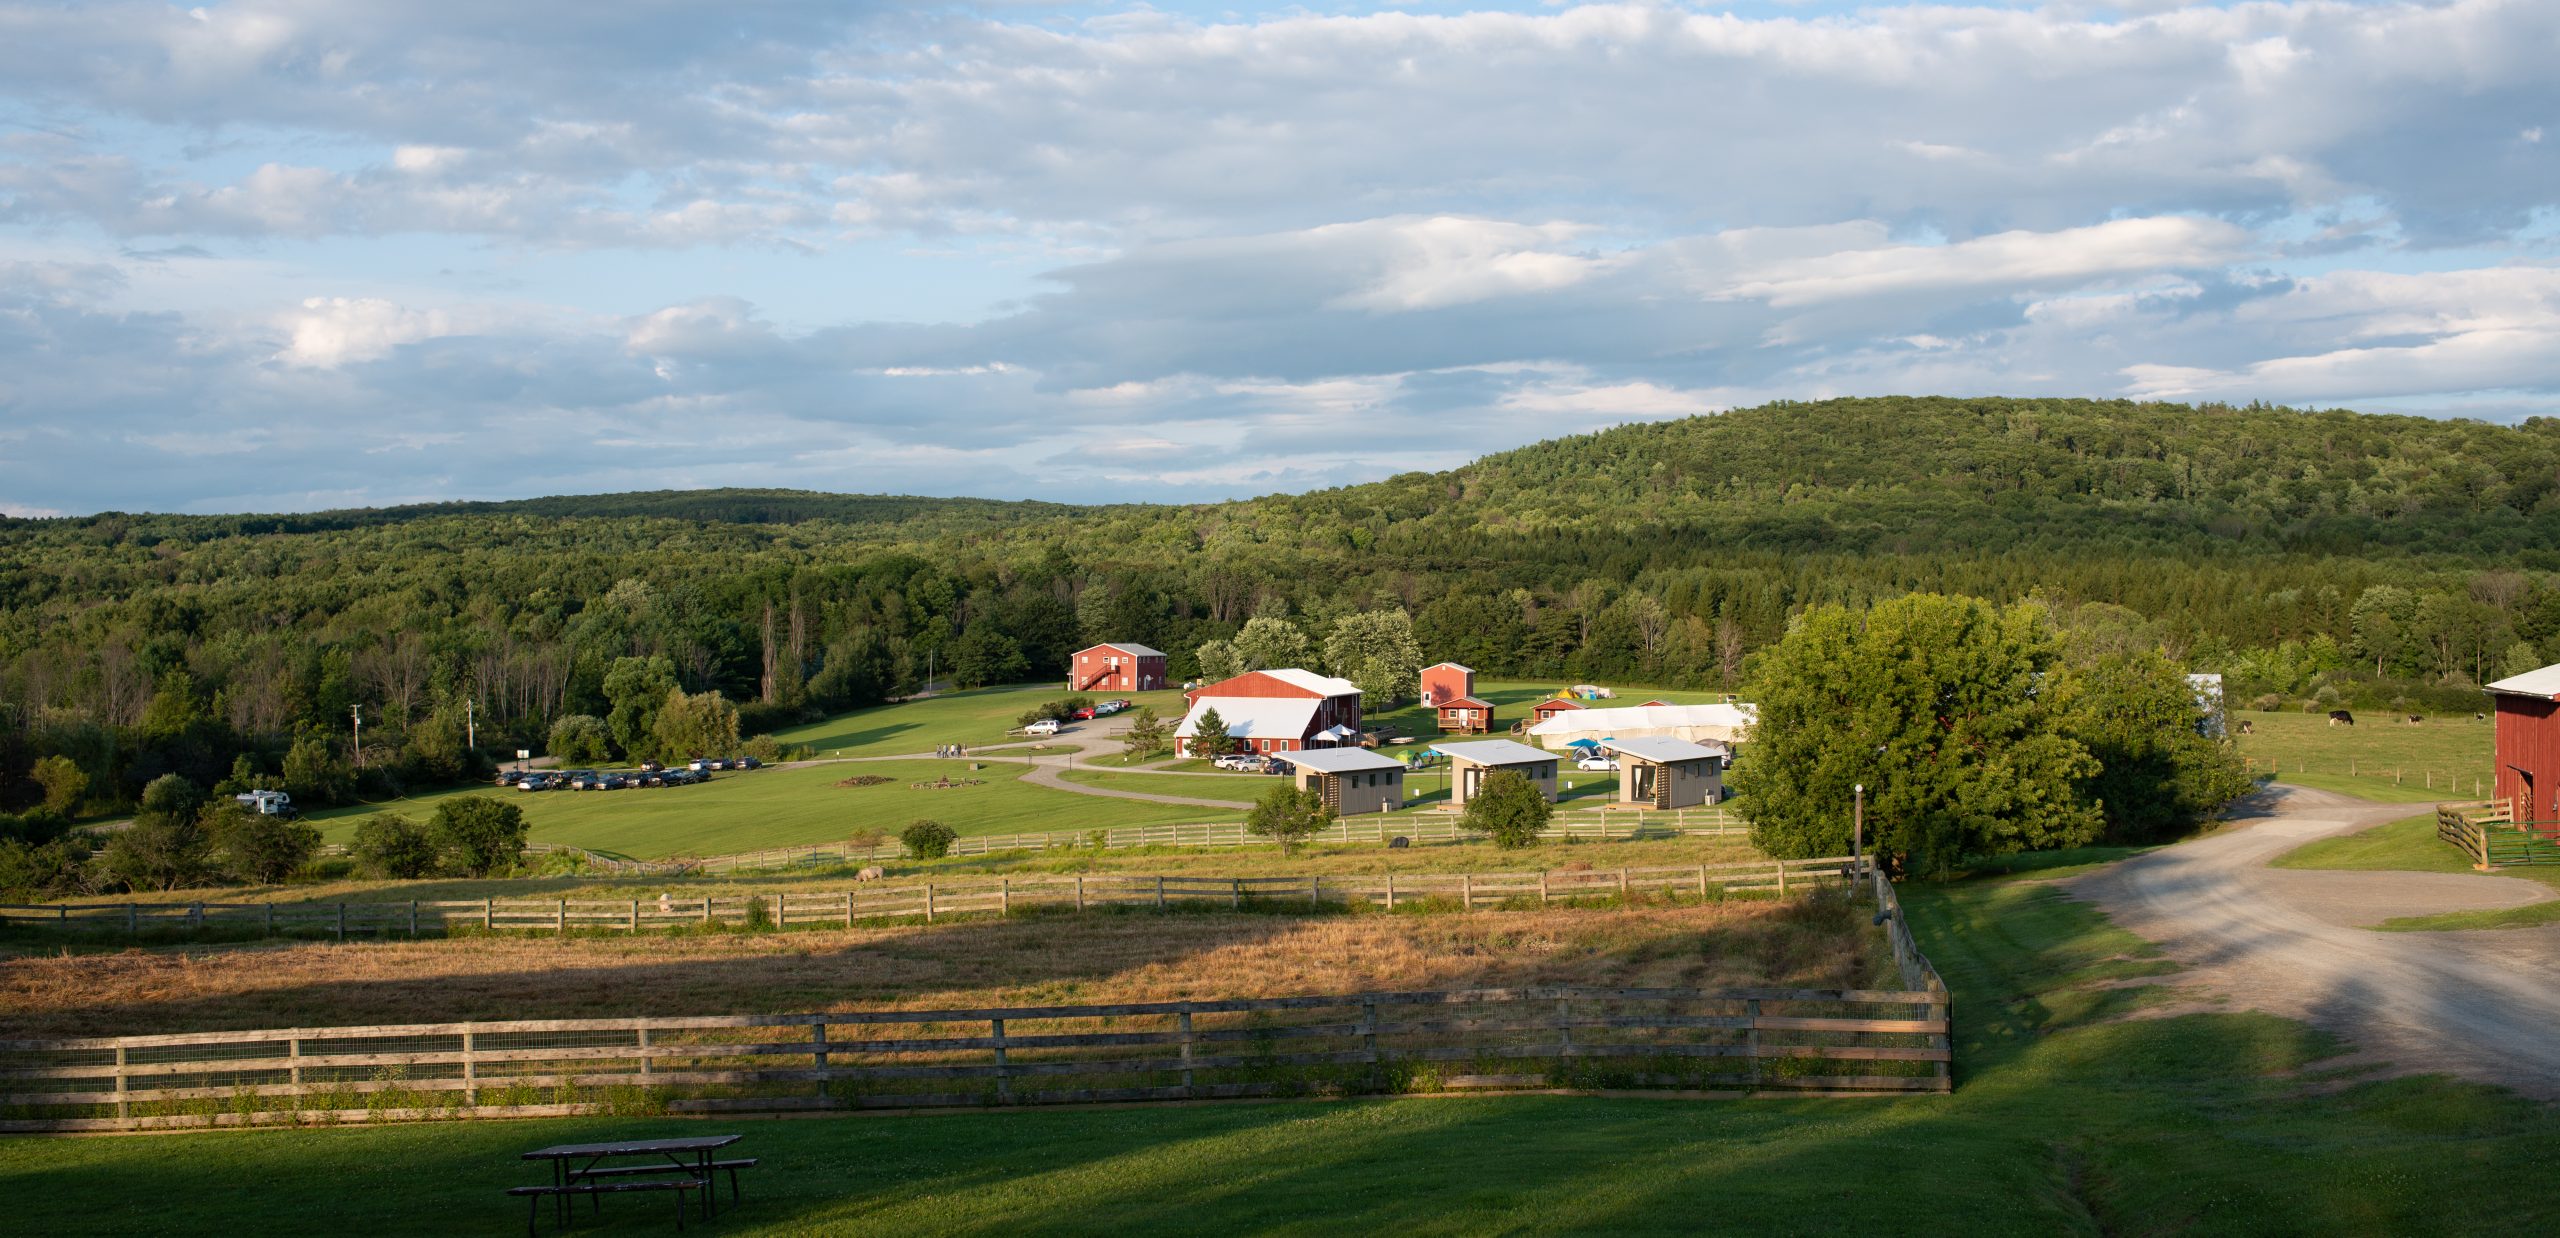 Farm Sanctuary scenic shot